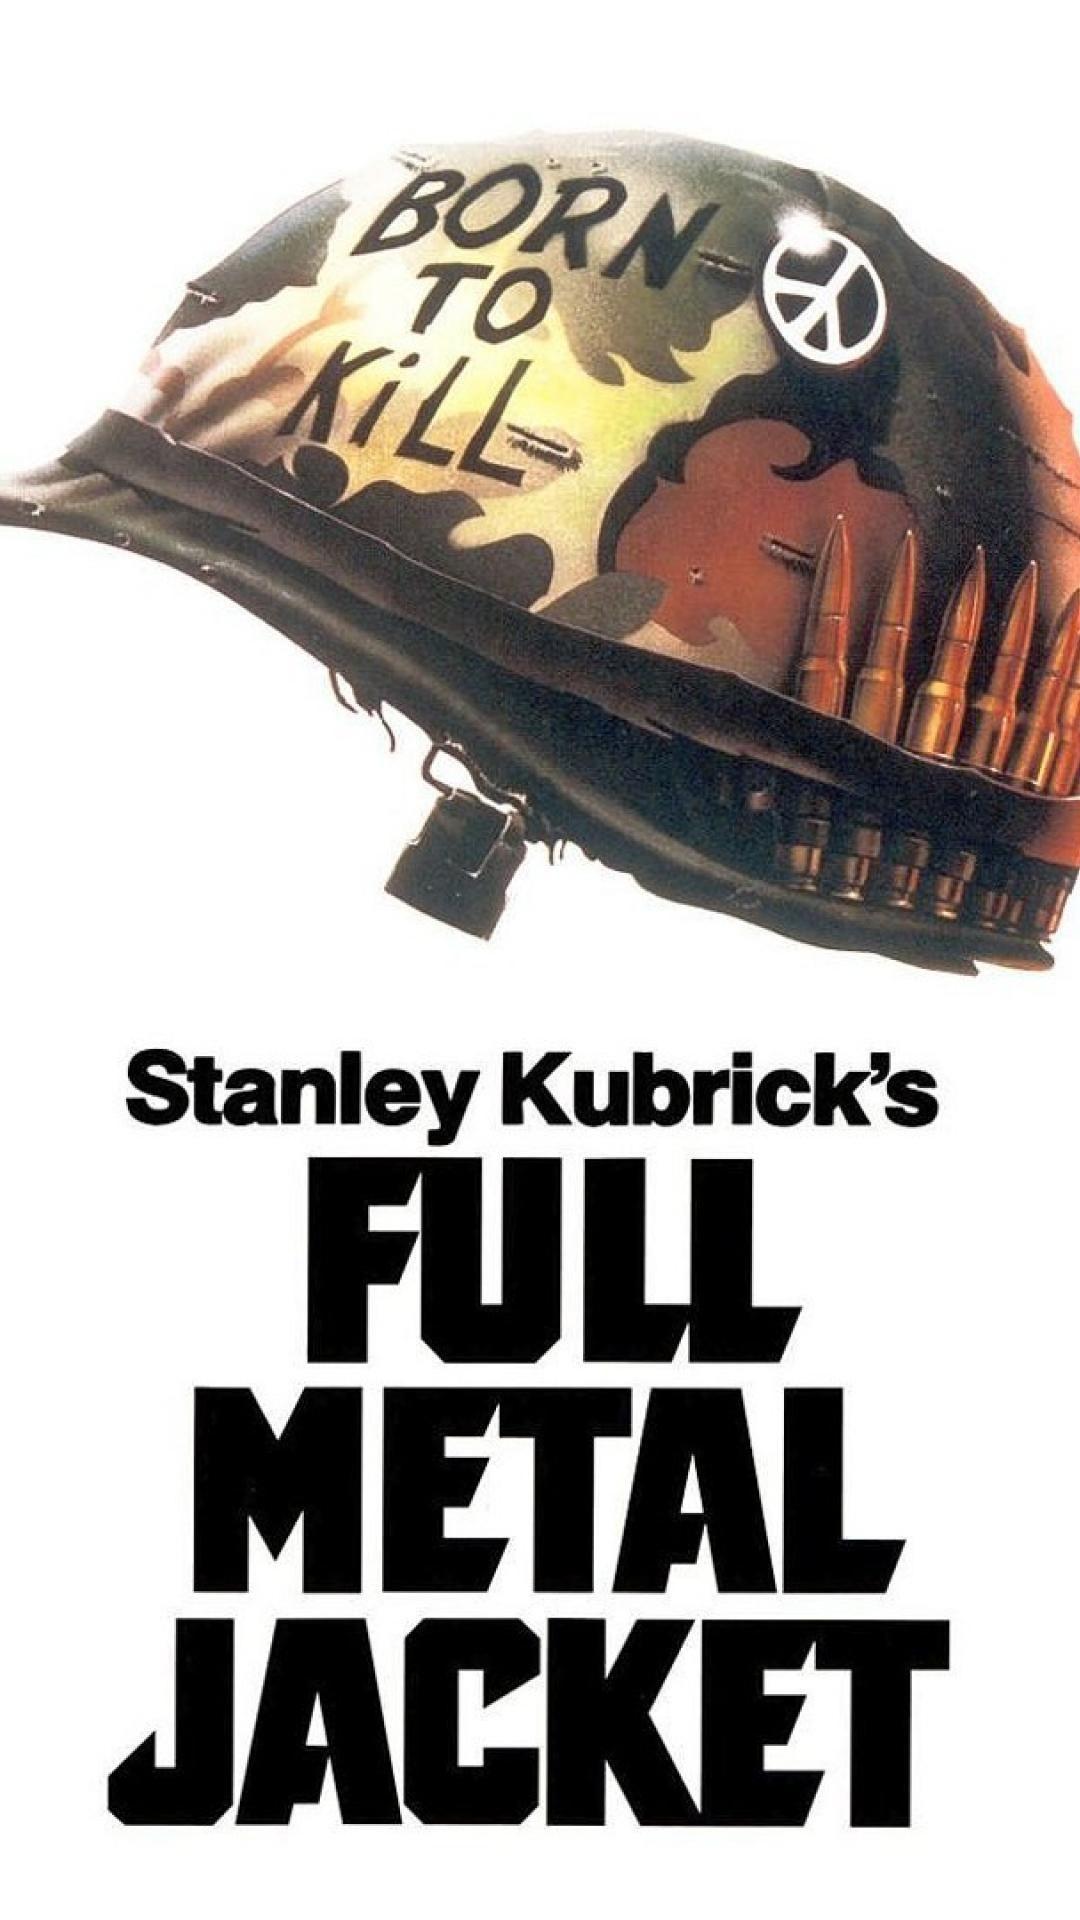 Movies full metal jacket stanley kubrick wallpaper